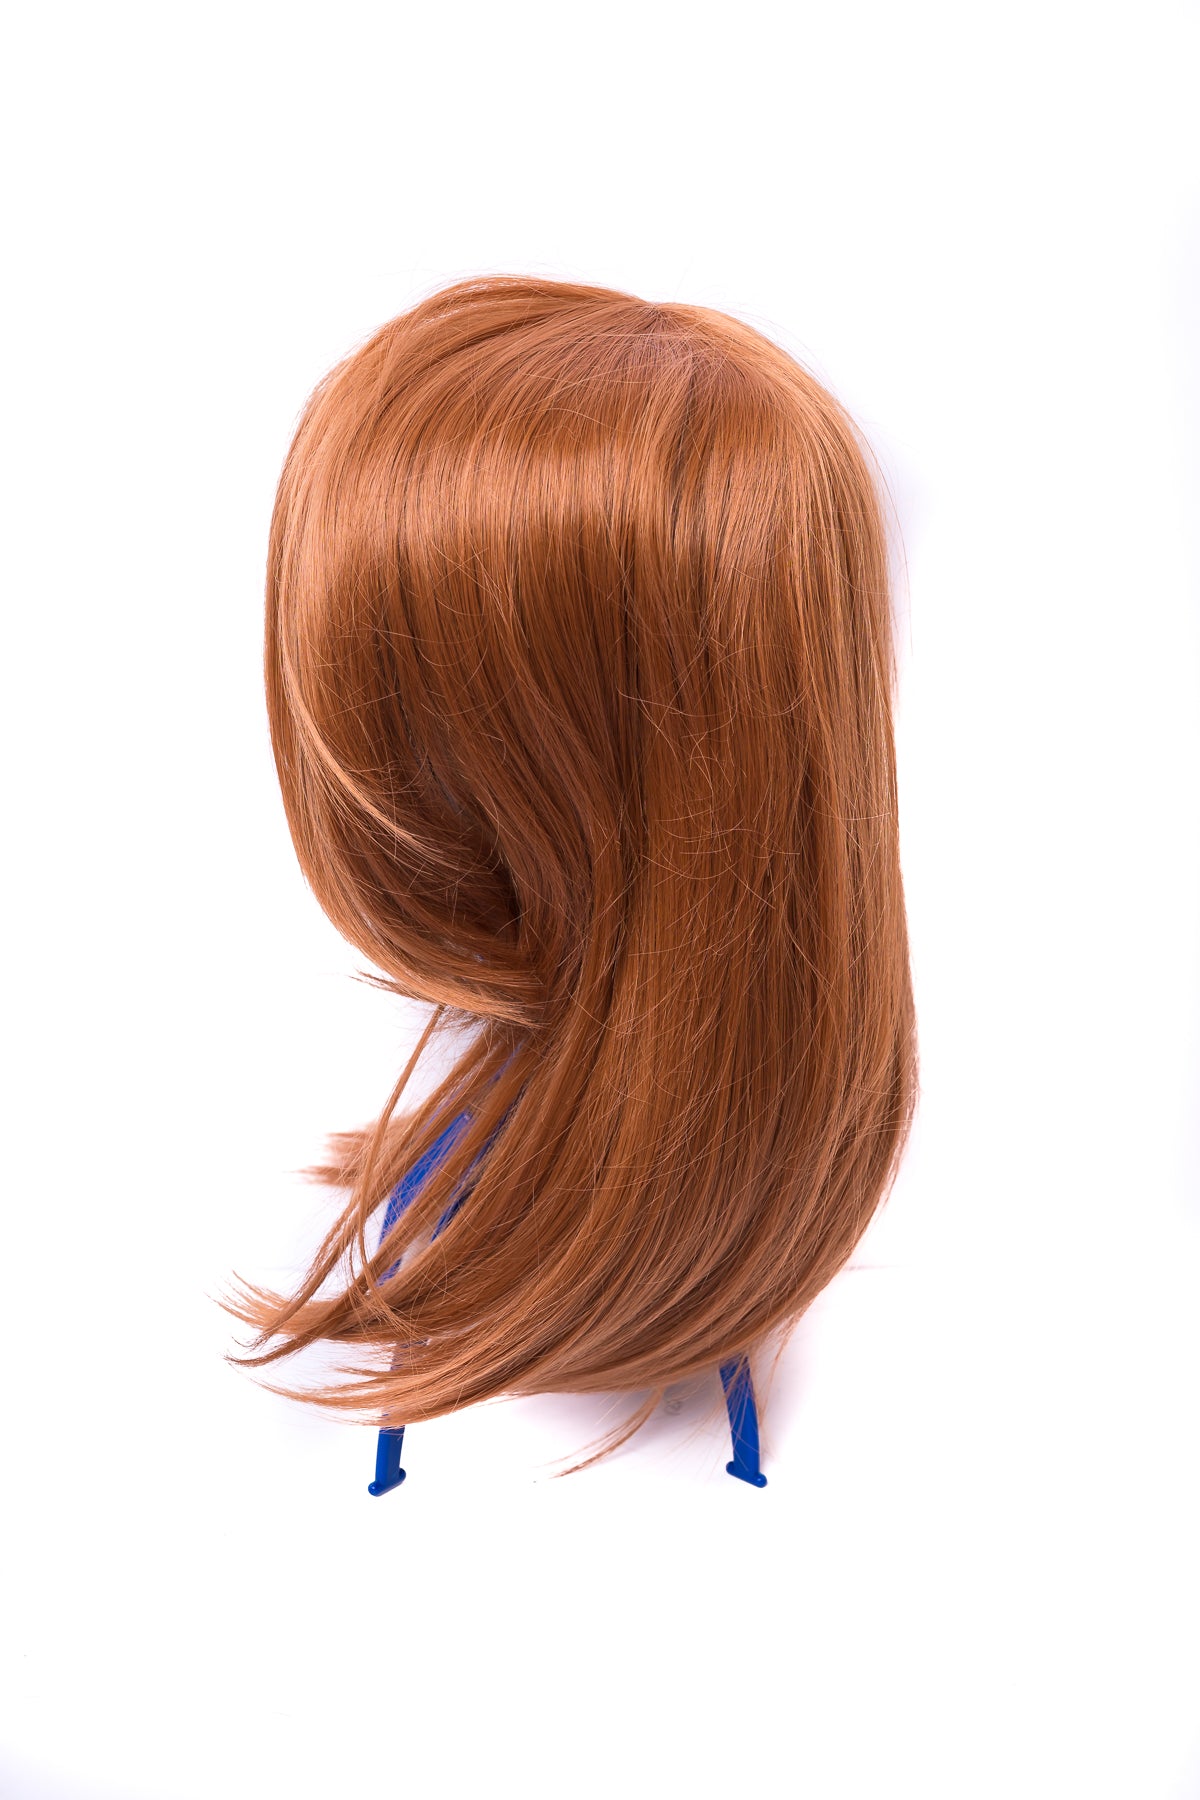 Premium Long Wig - Brown with Bangs